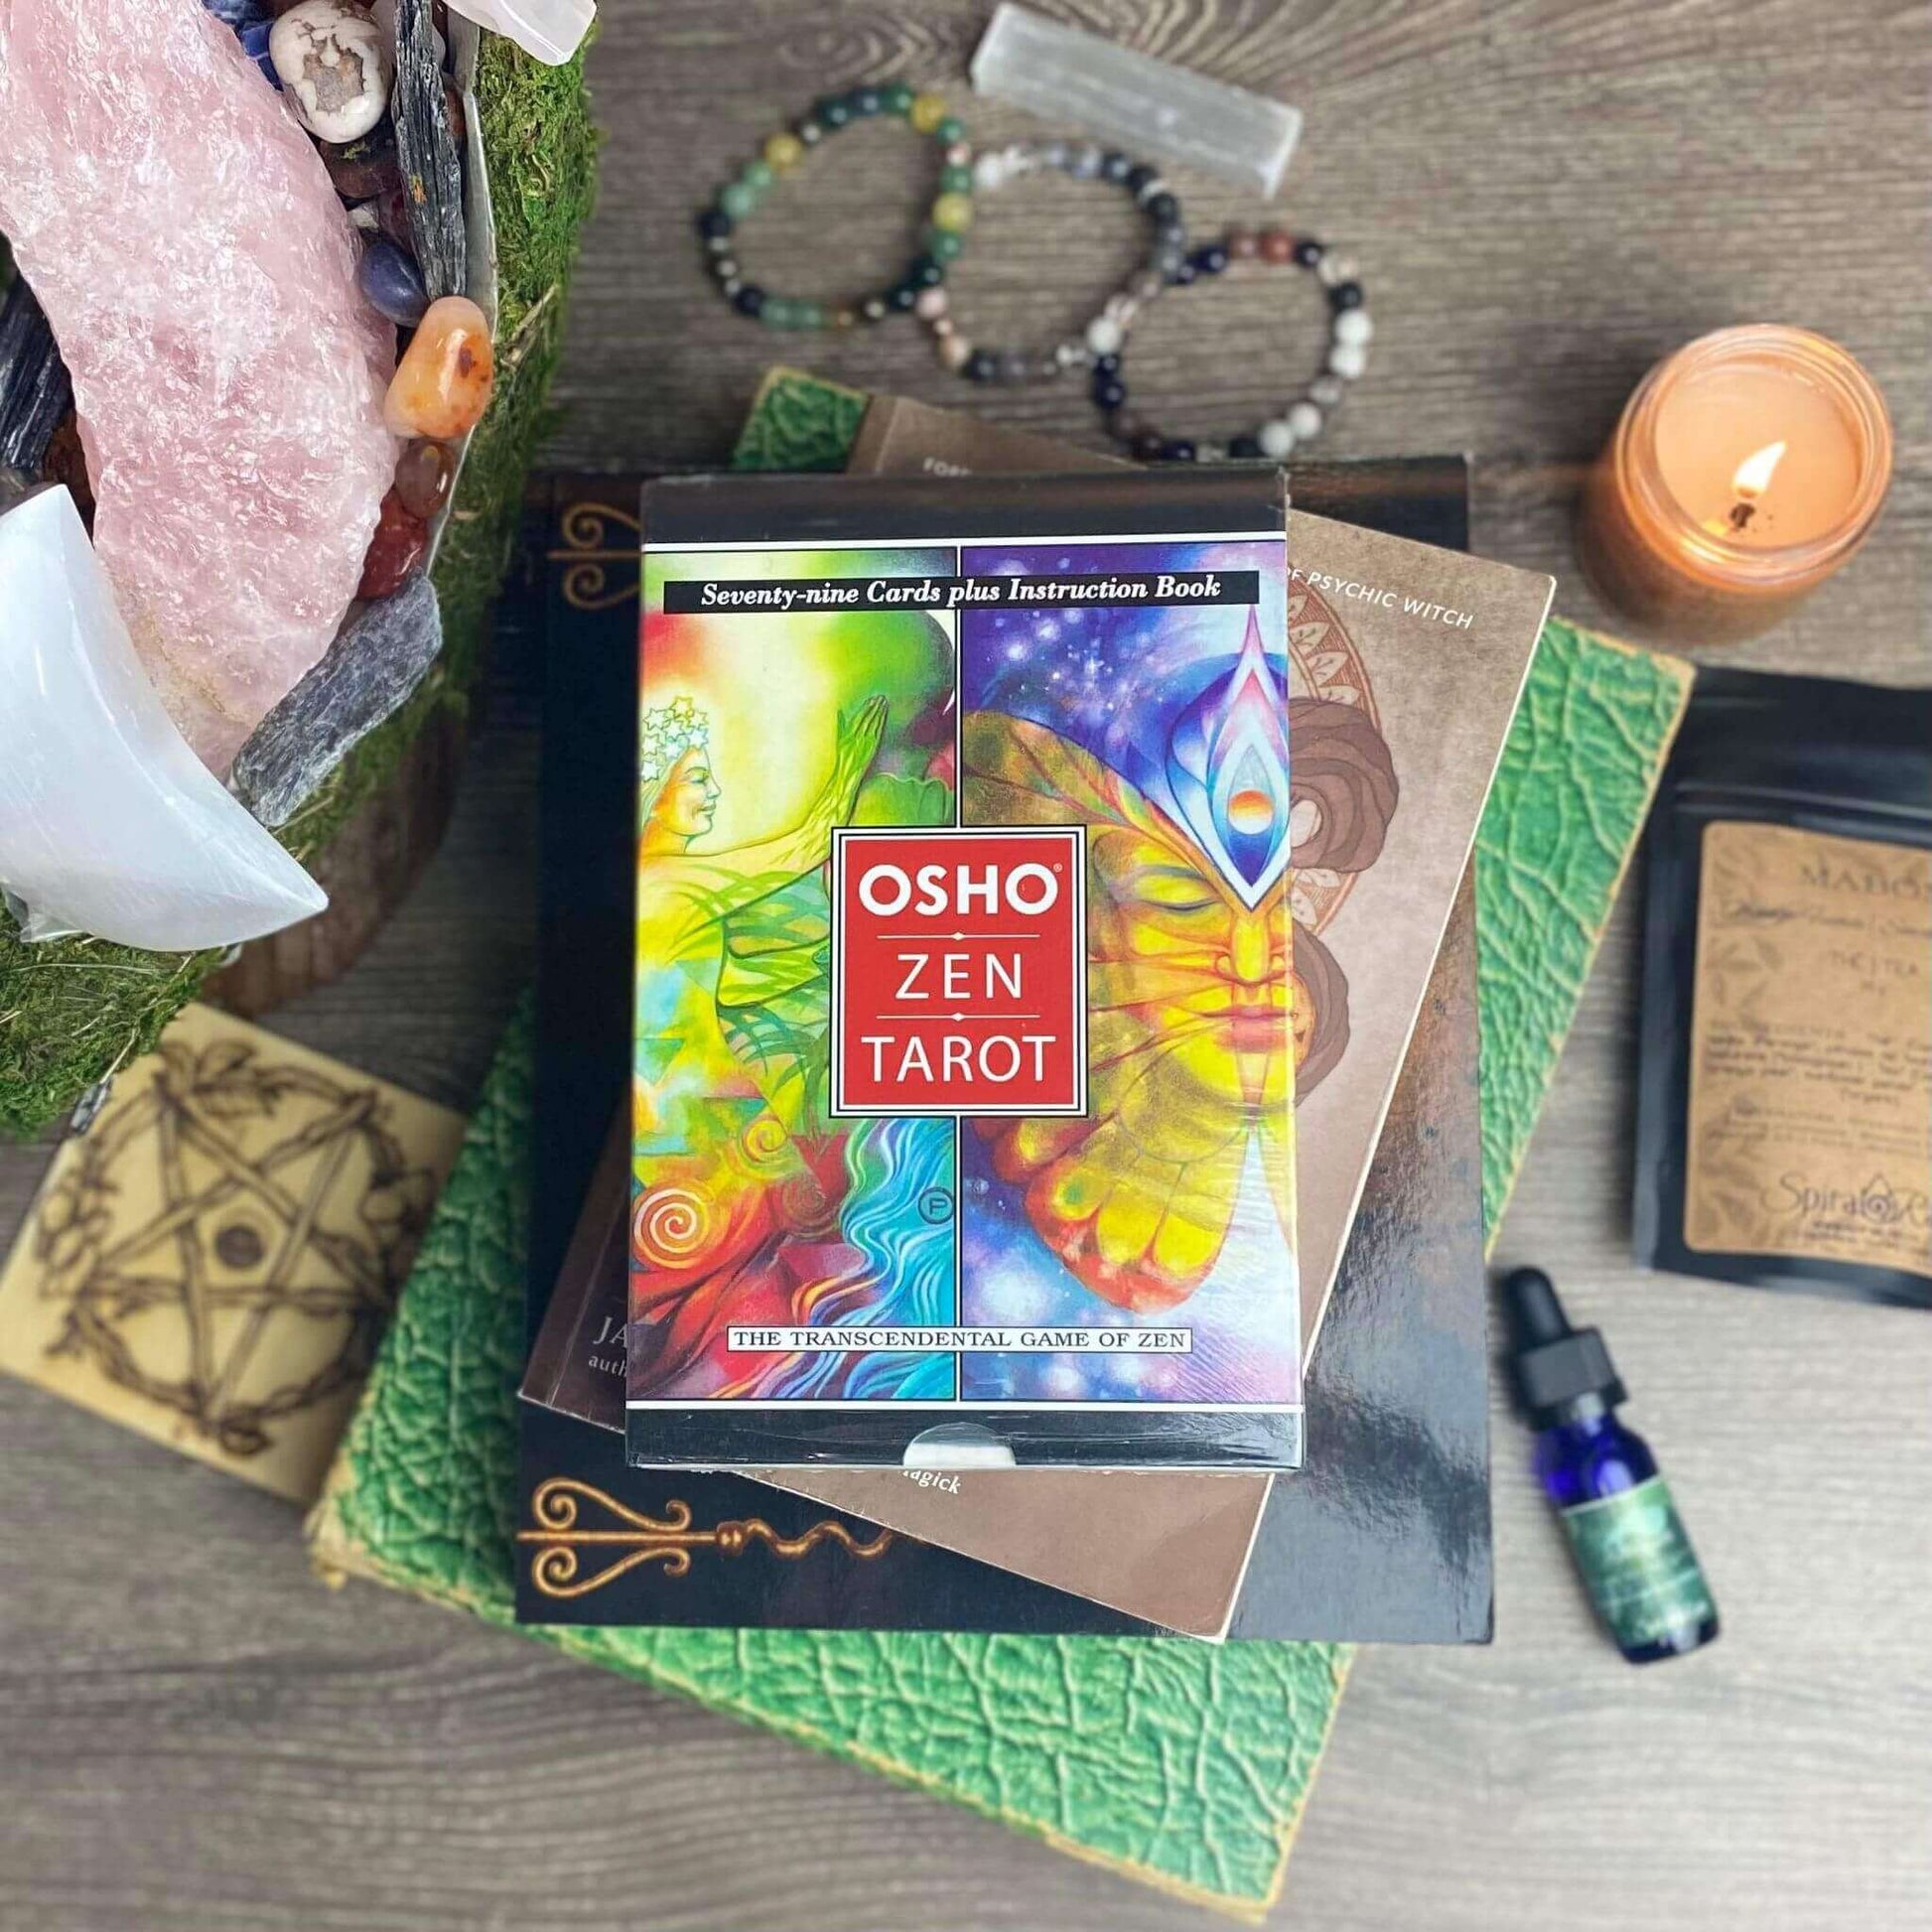 Osho Zen Tarot (Book & Cards) at $33.12 only from Spiral Rain